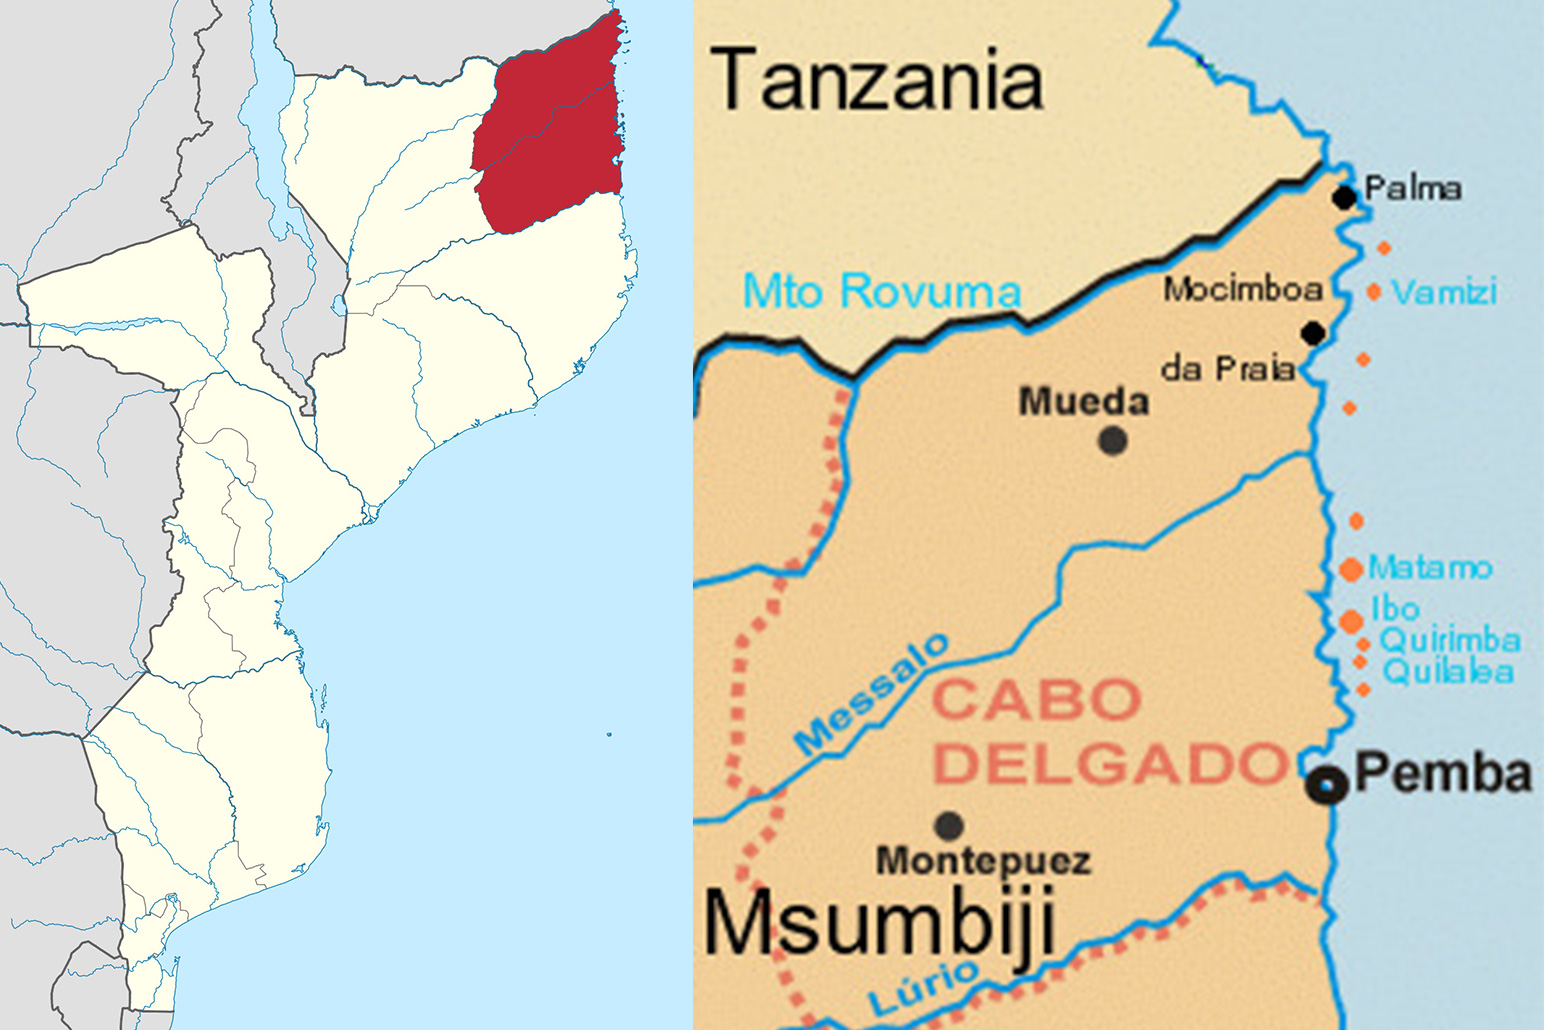 Cabo Delgado area in Mozambique, TotalEnergies